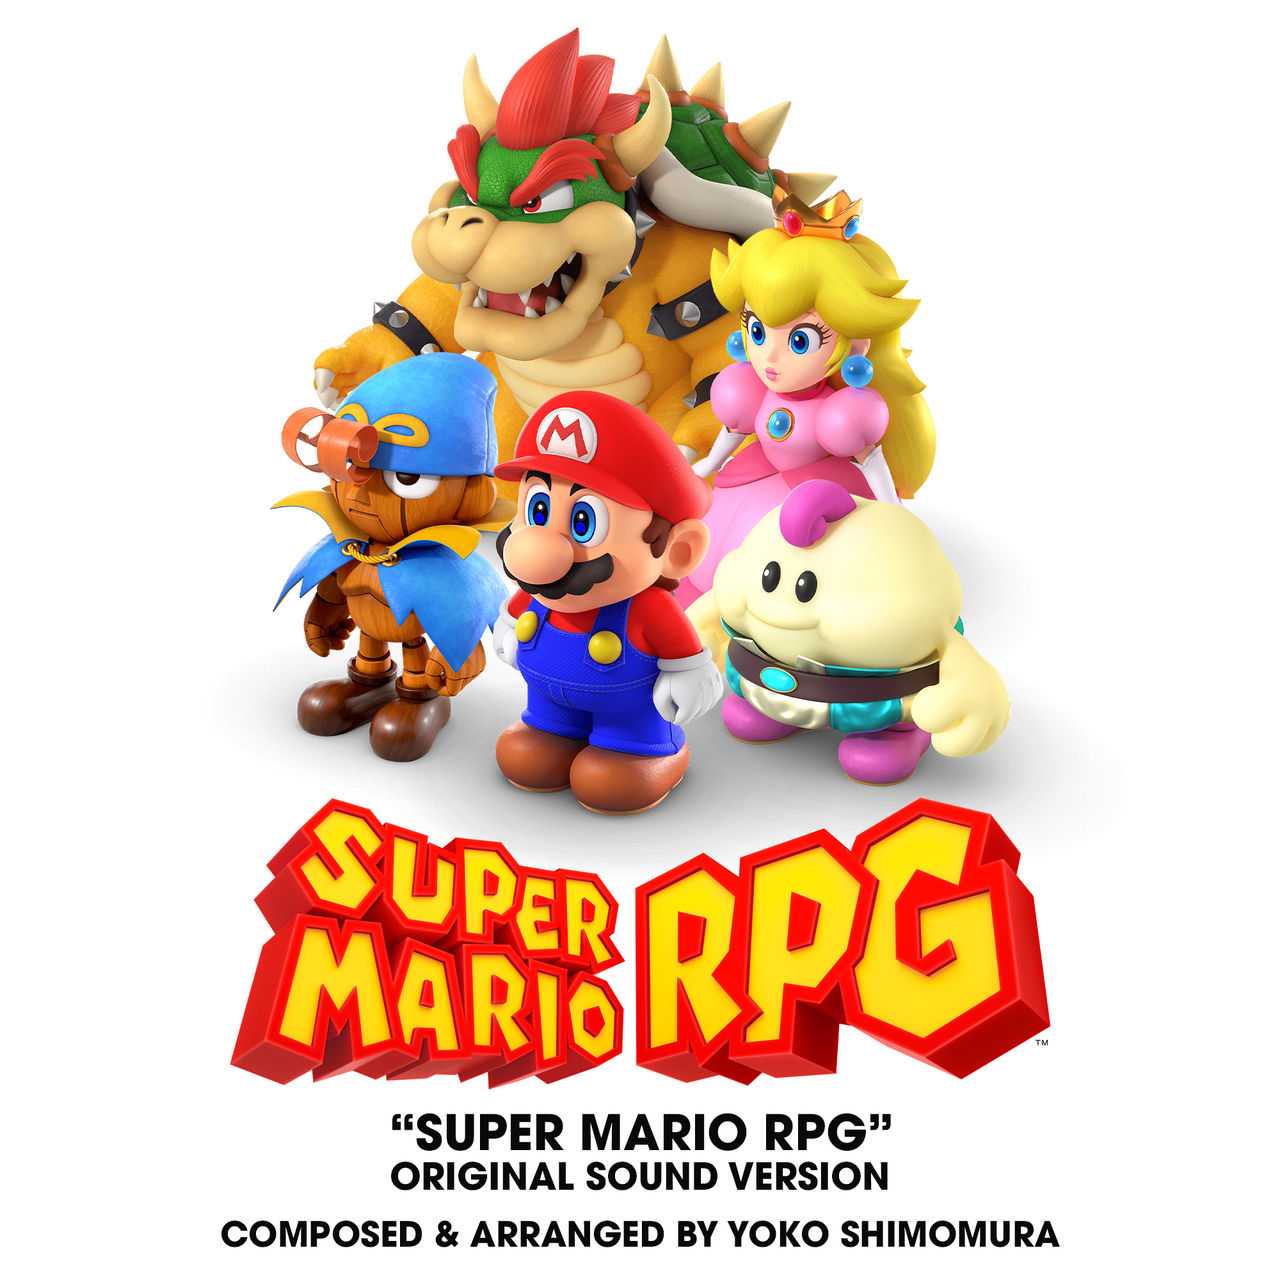 Super Mario RPG - Original Soundtrack by Party64DS on DeviantArt